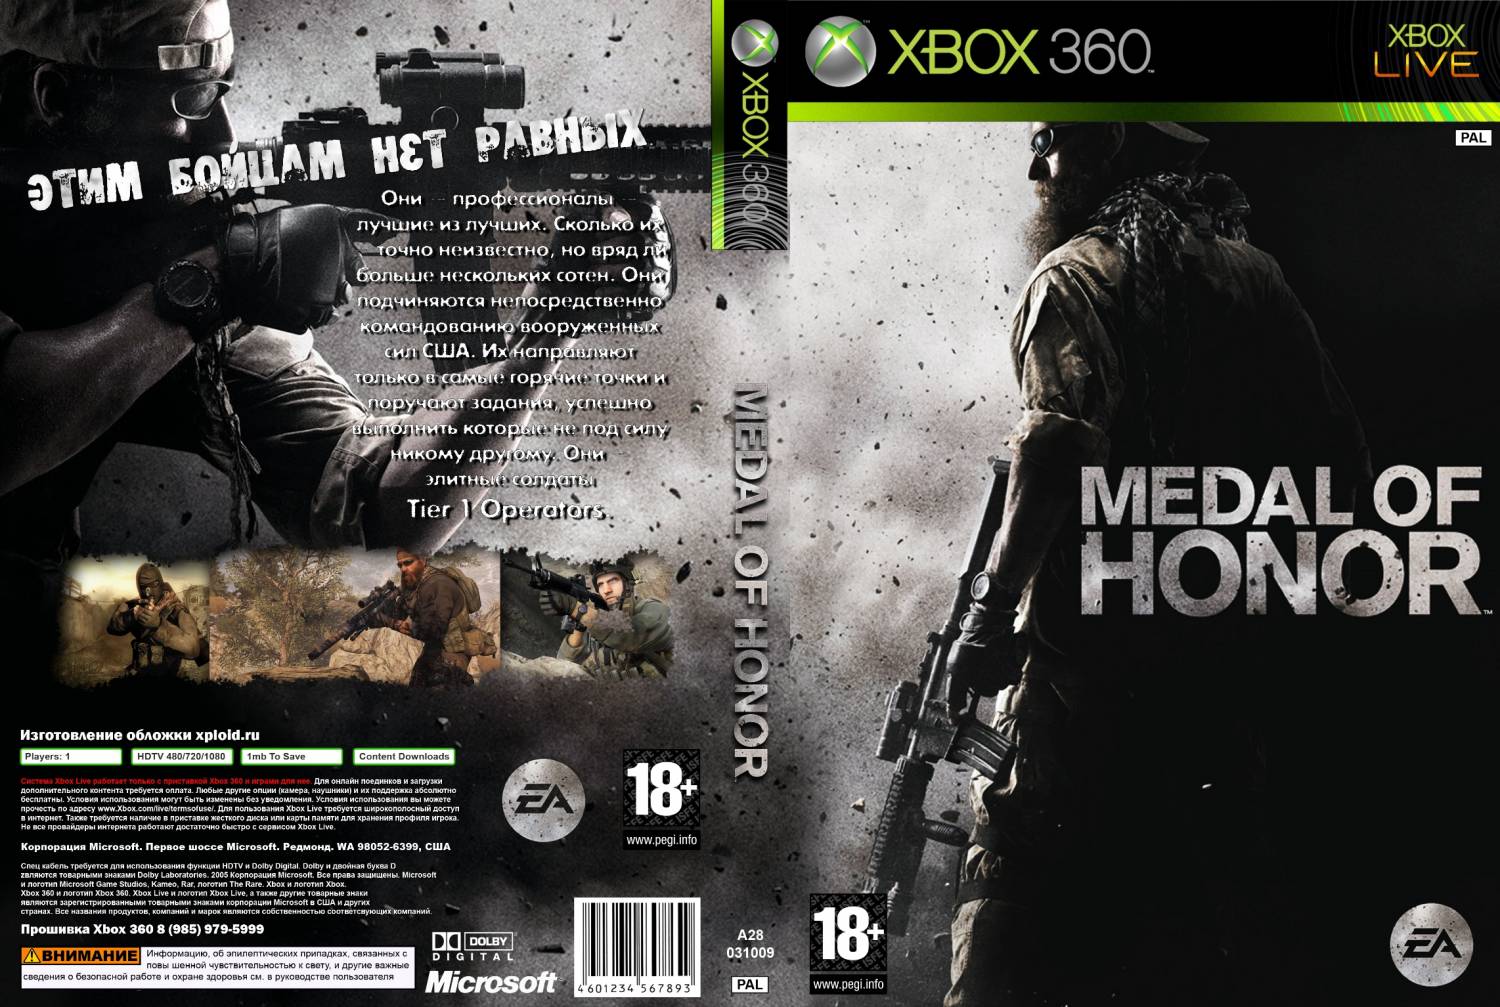 Игры xbox 360 телефон. Medal of Honor Xbox 360 обложка. Medal of Honor 2010 обложка. Медаль оф хонор на Икс бокс 360. Medal of Honor 2010 Xbox 360 обложка.